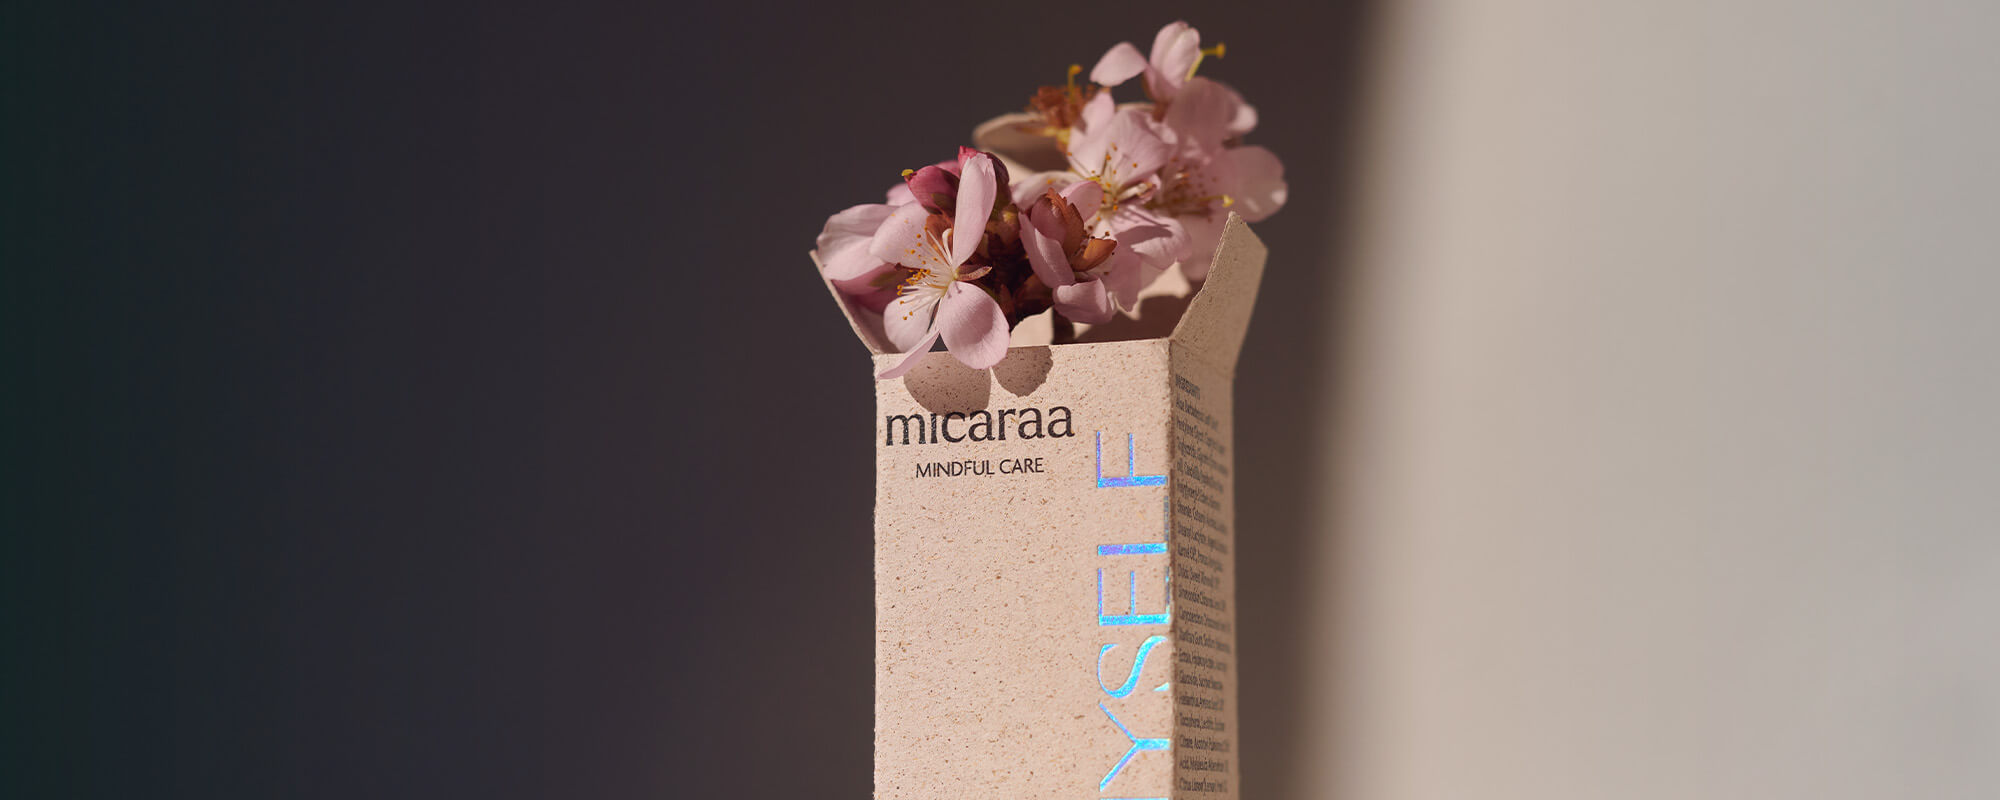 Micaraa Mindful Standard Blume